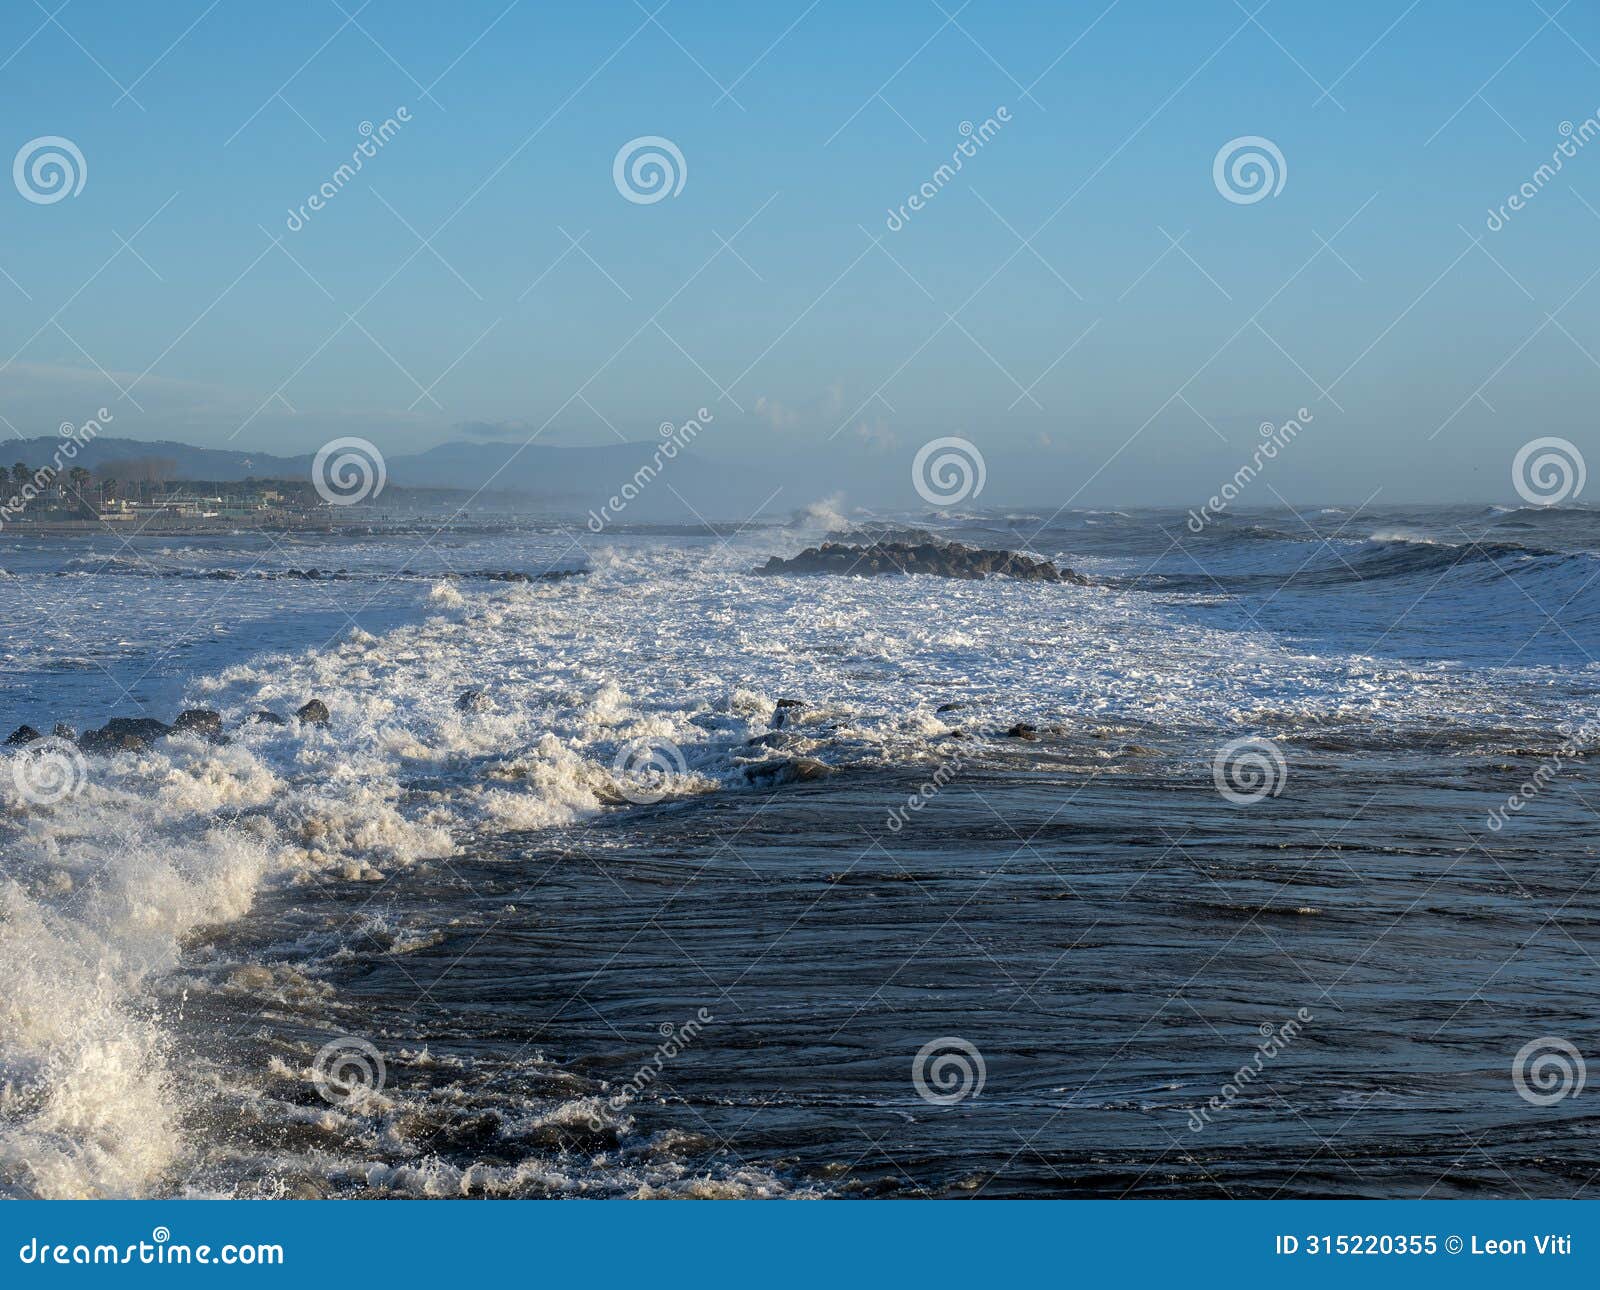 crashing waves on the beach in massa